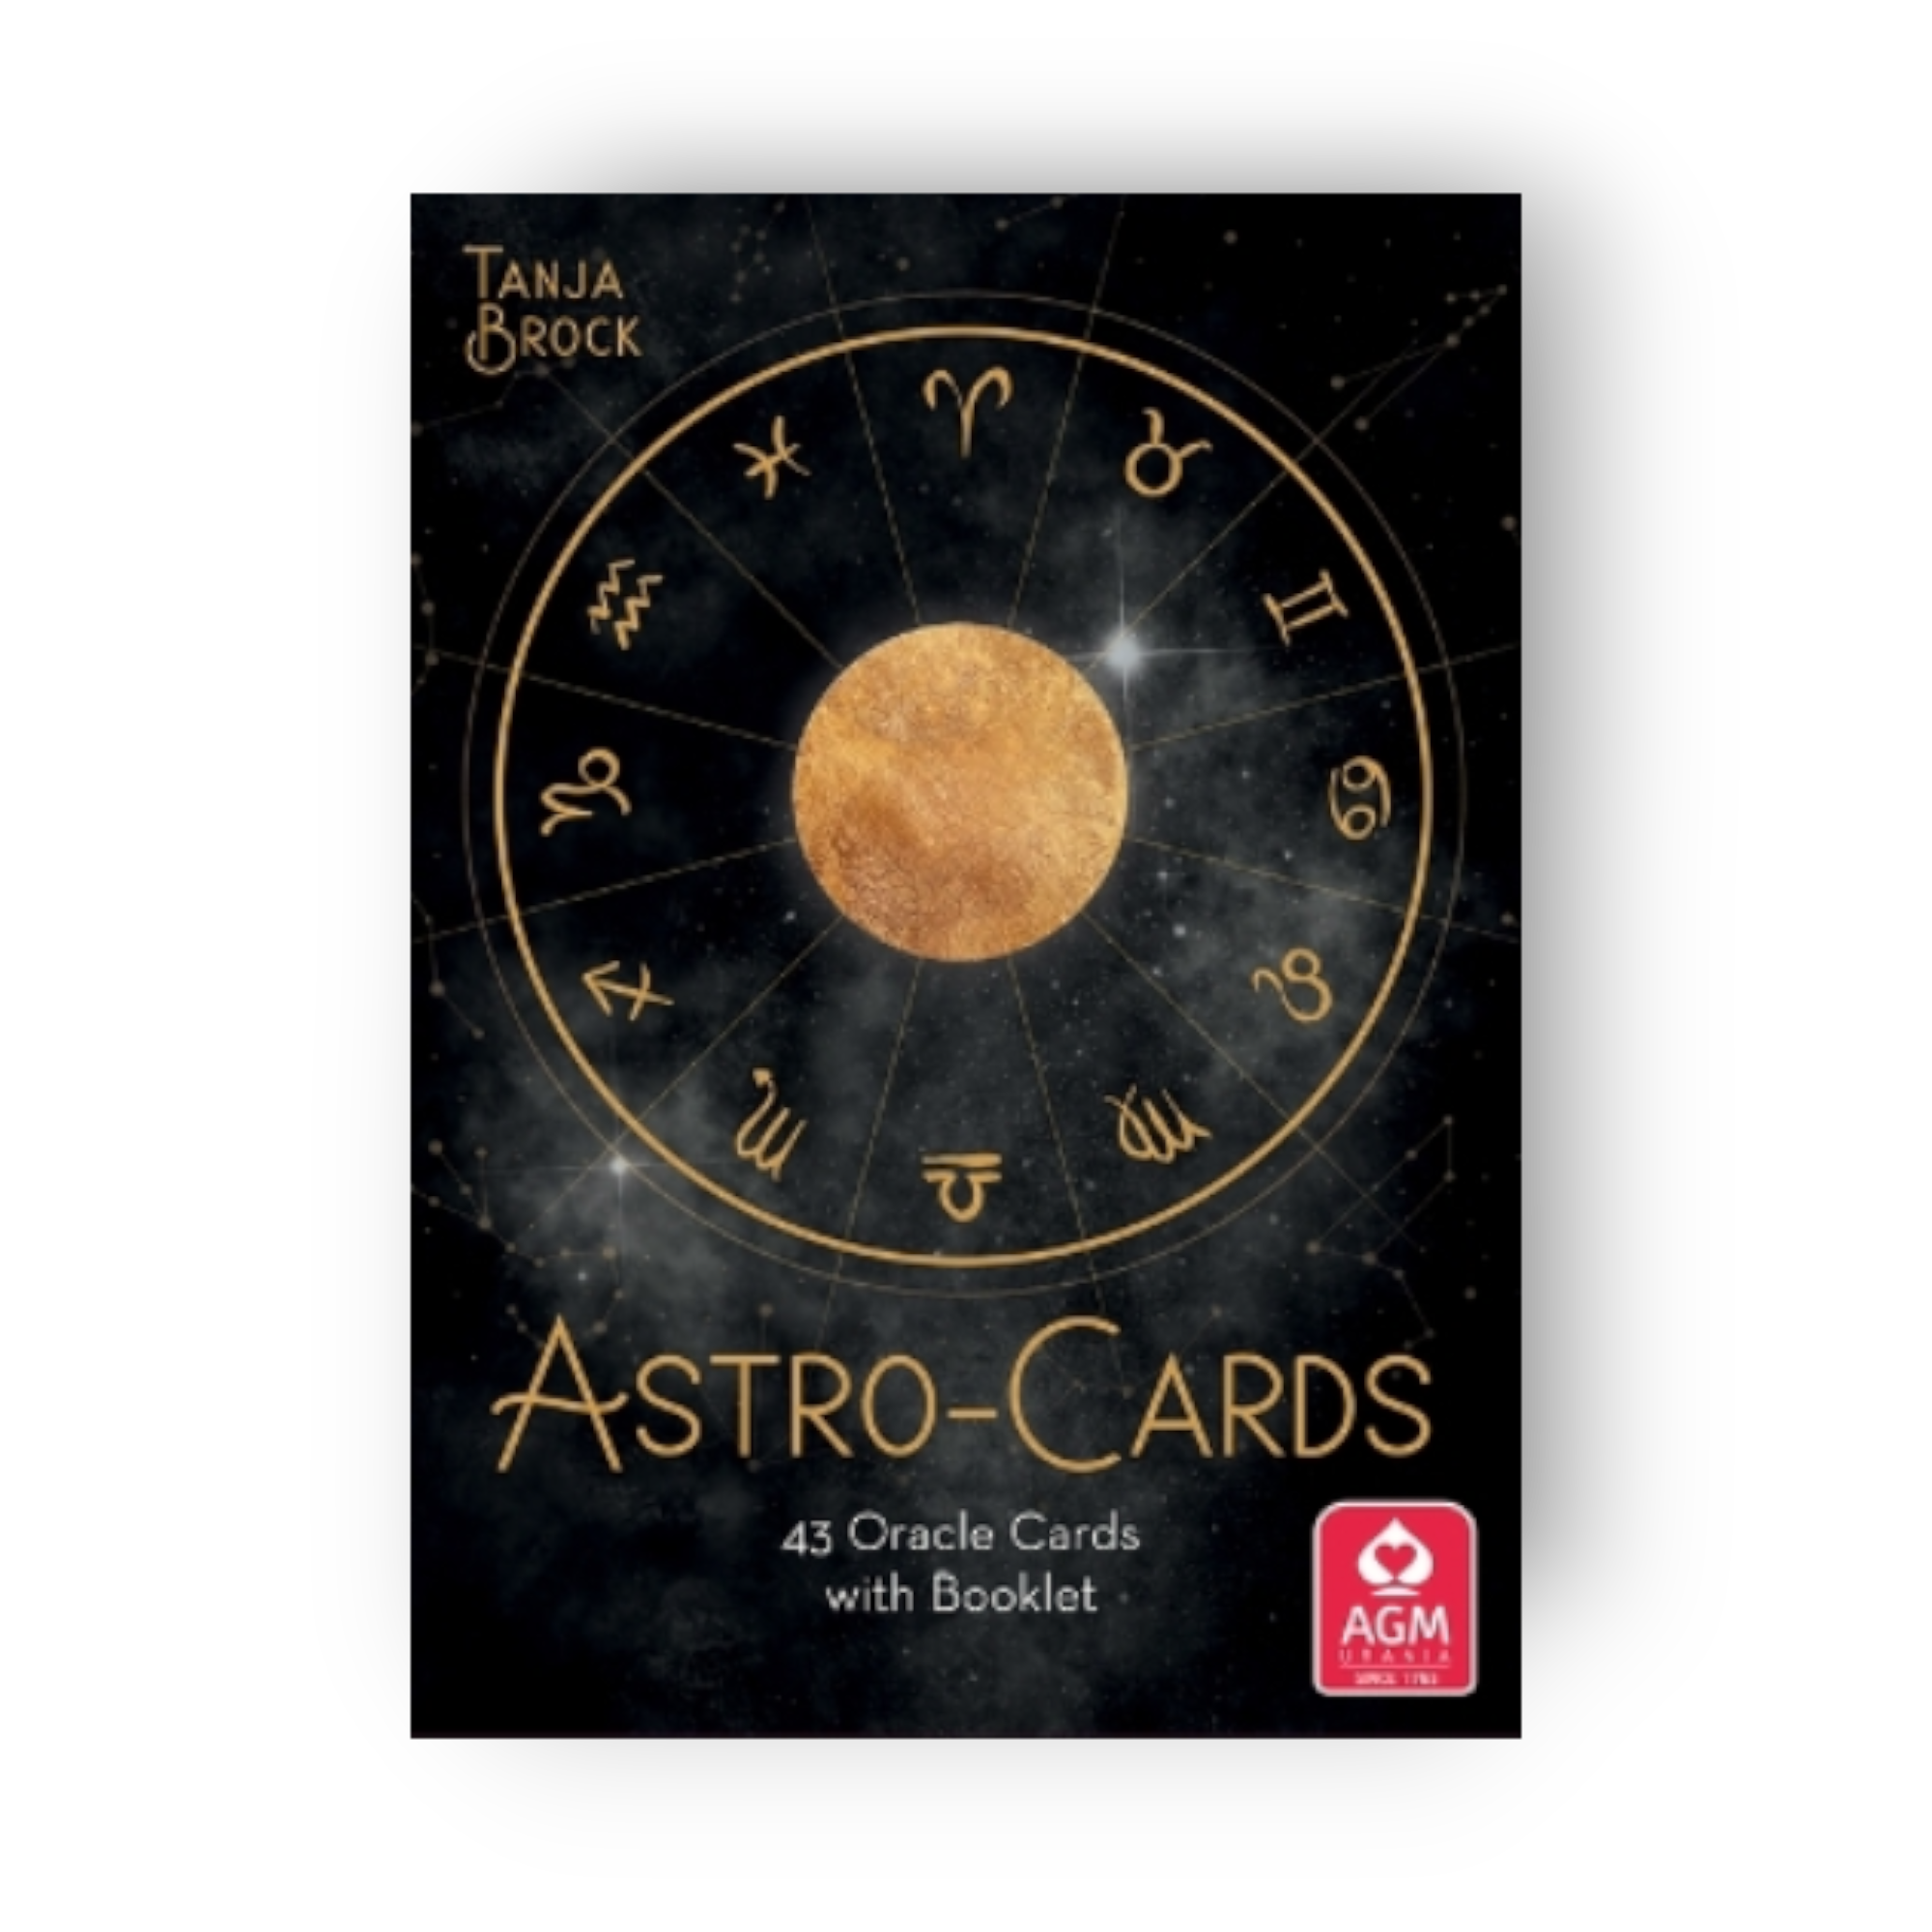 Astro Cards - Tanja Brock